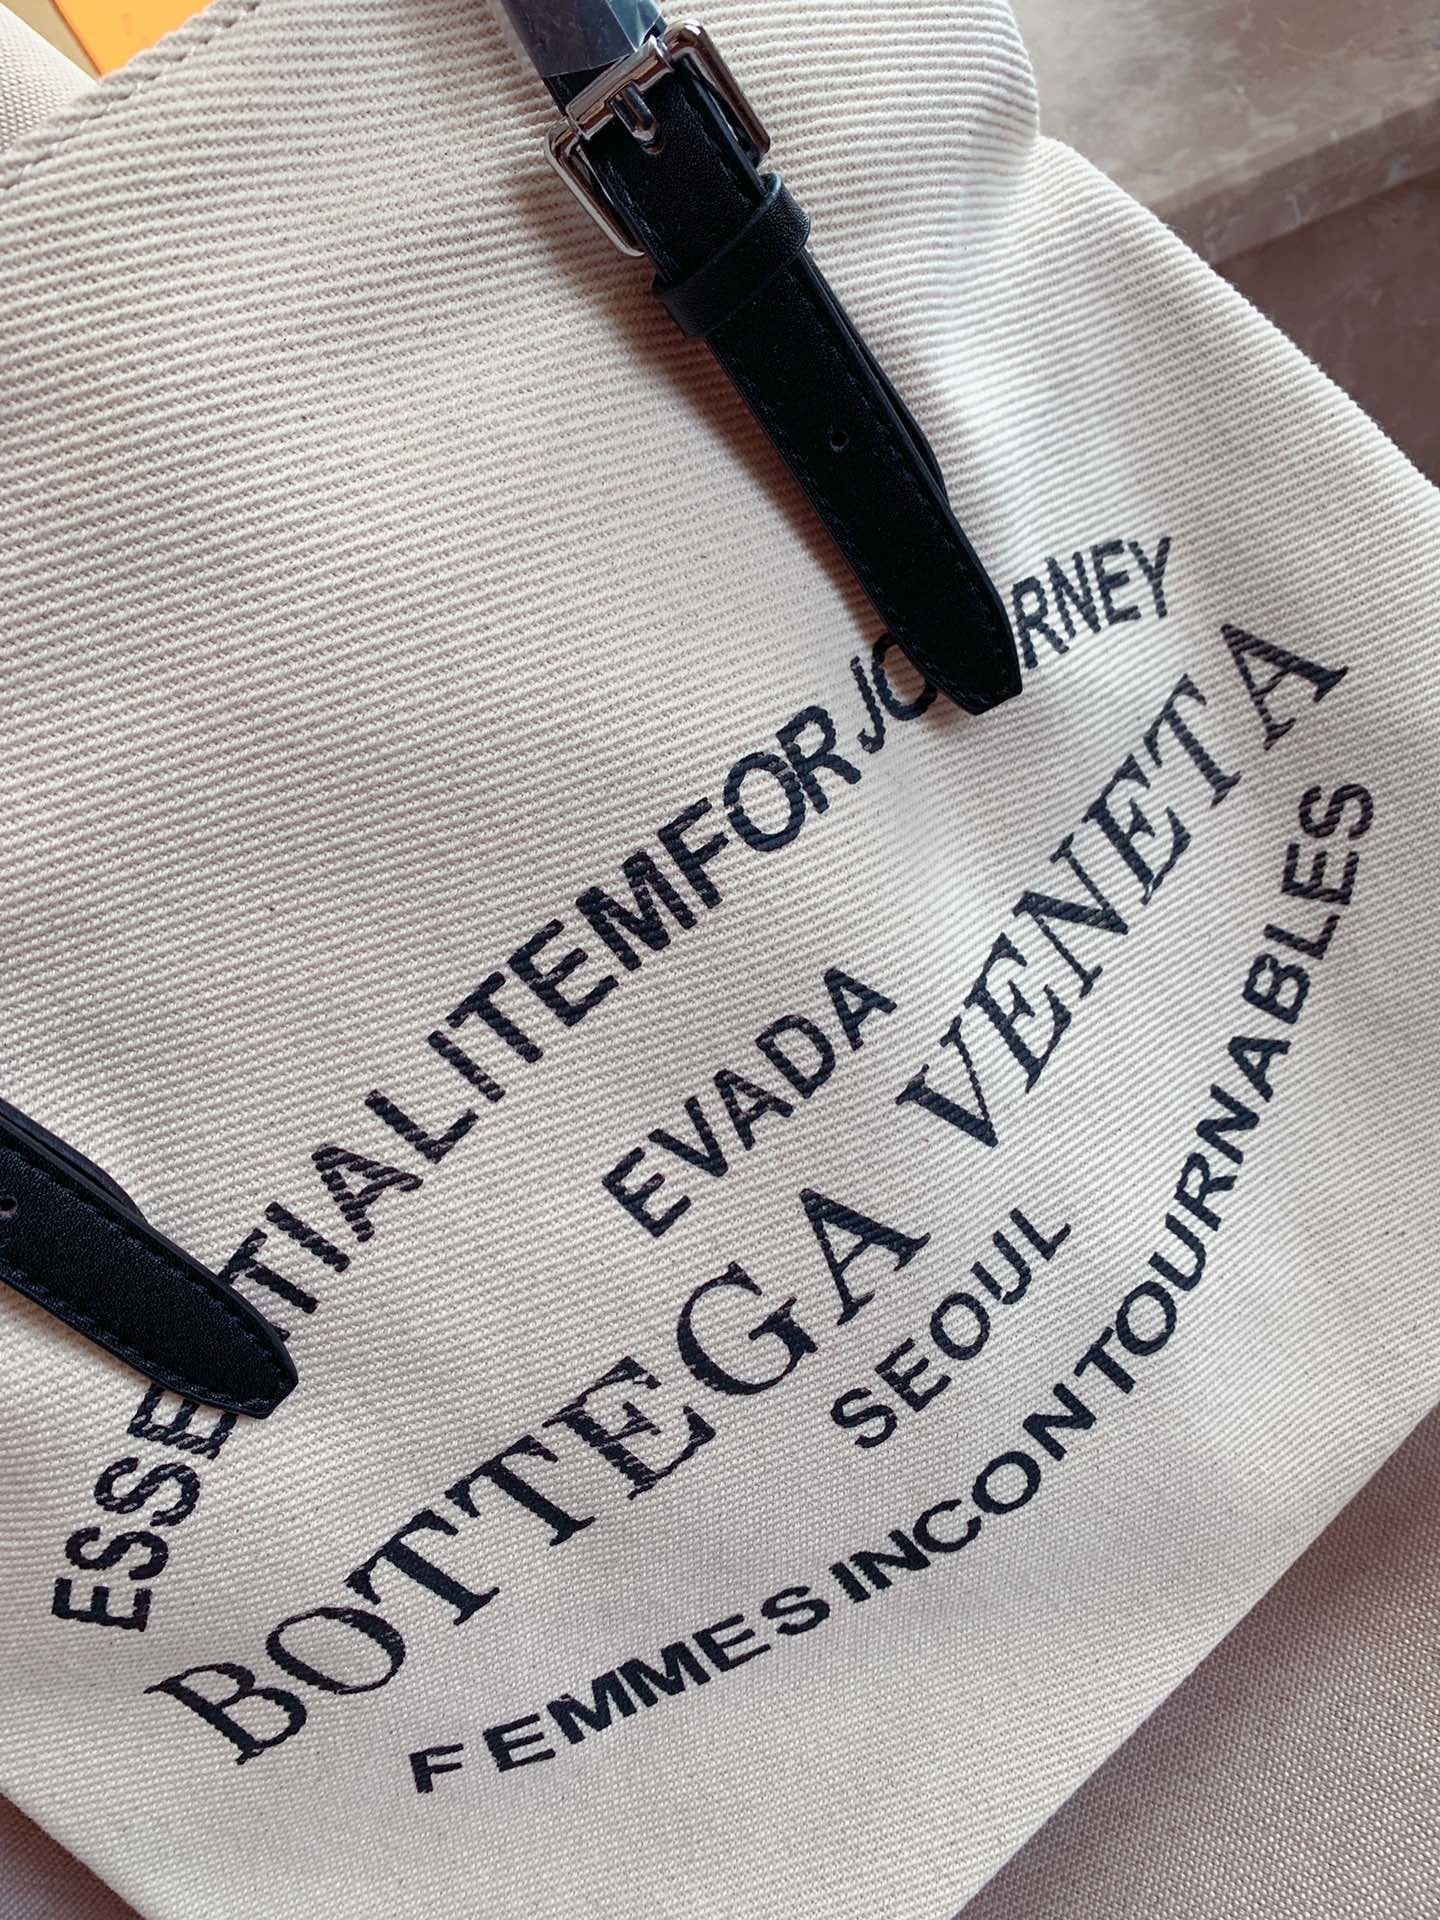 BVLGARI New Women Shopping Bag Canvas Handbag Tote Shoulder Bag Satchel